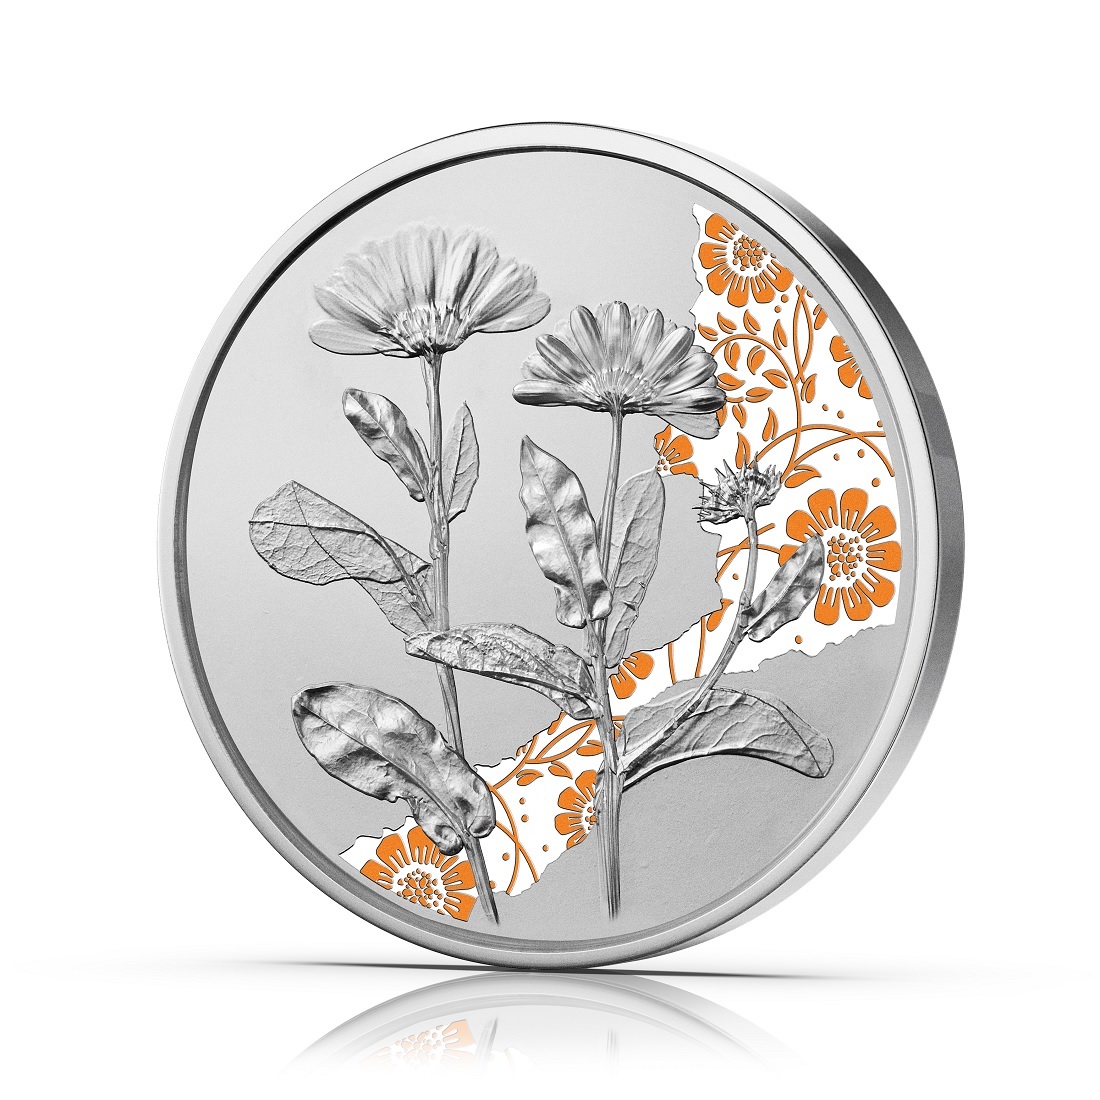 (EUR01.Proof.2022.25627) 10 € Austria 2022 Proof silver - Marigold Reverse (zoom)